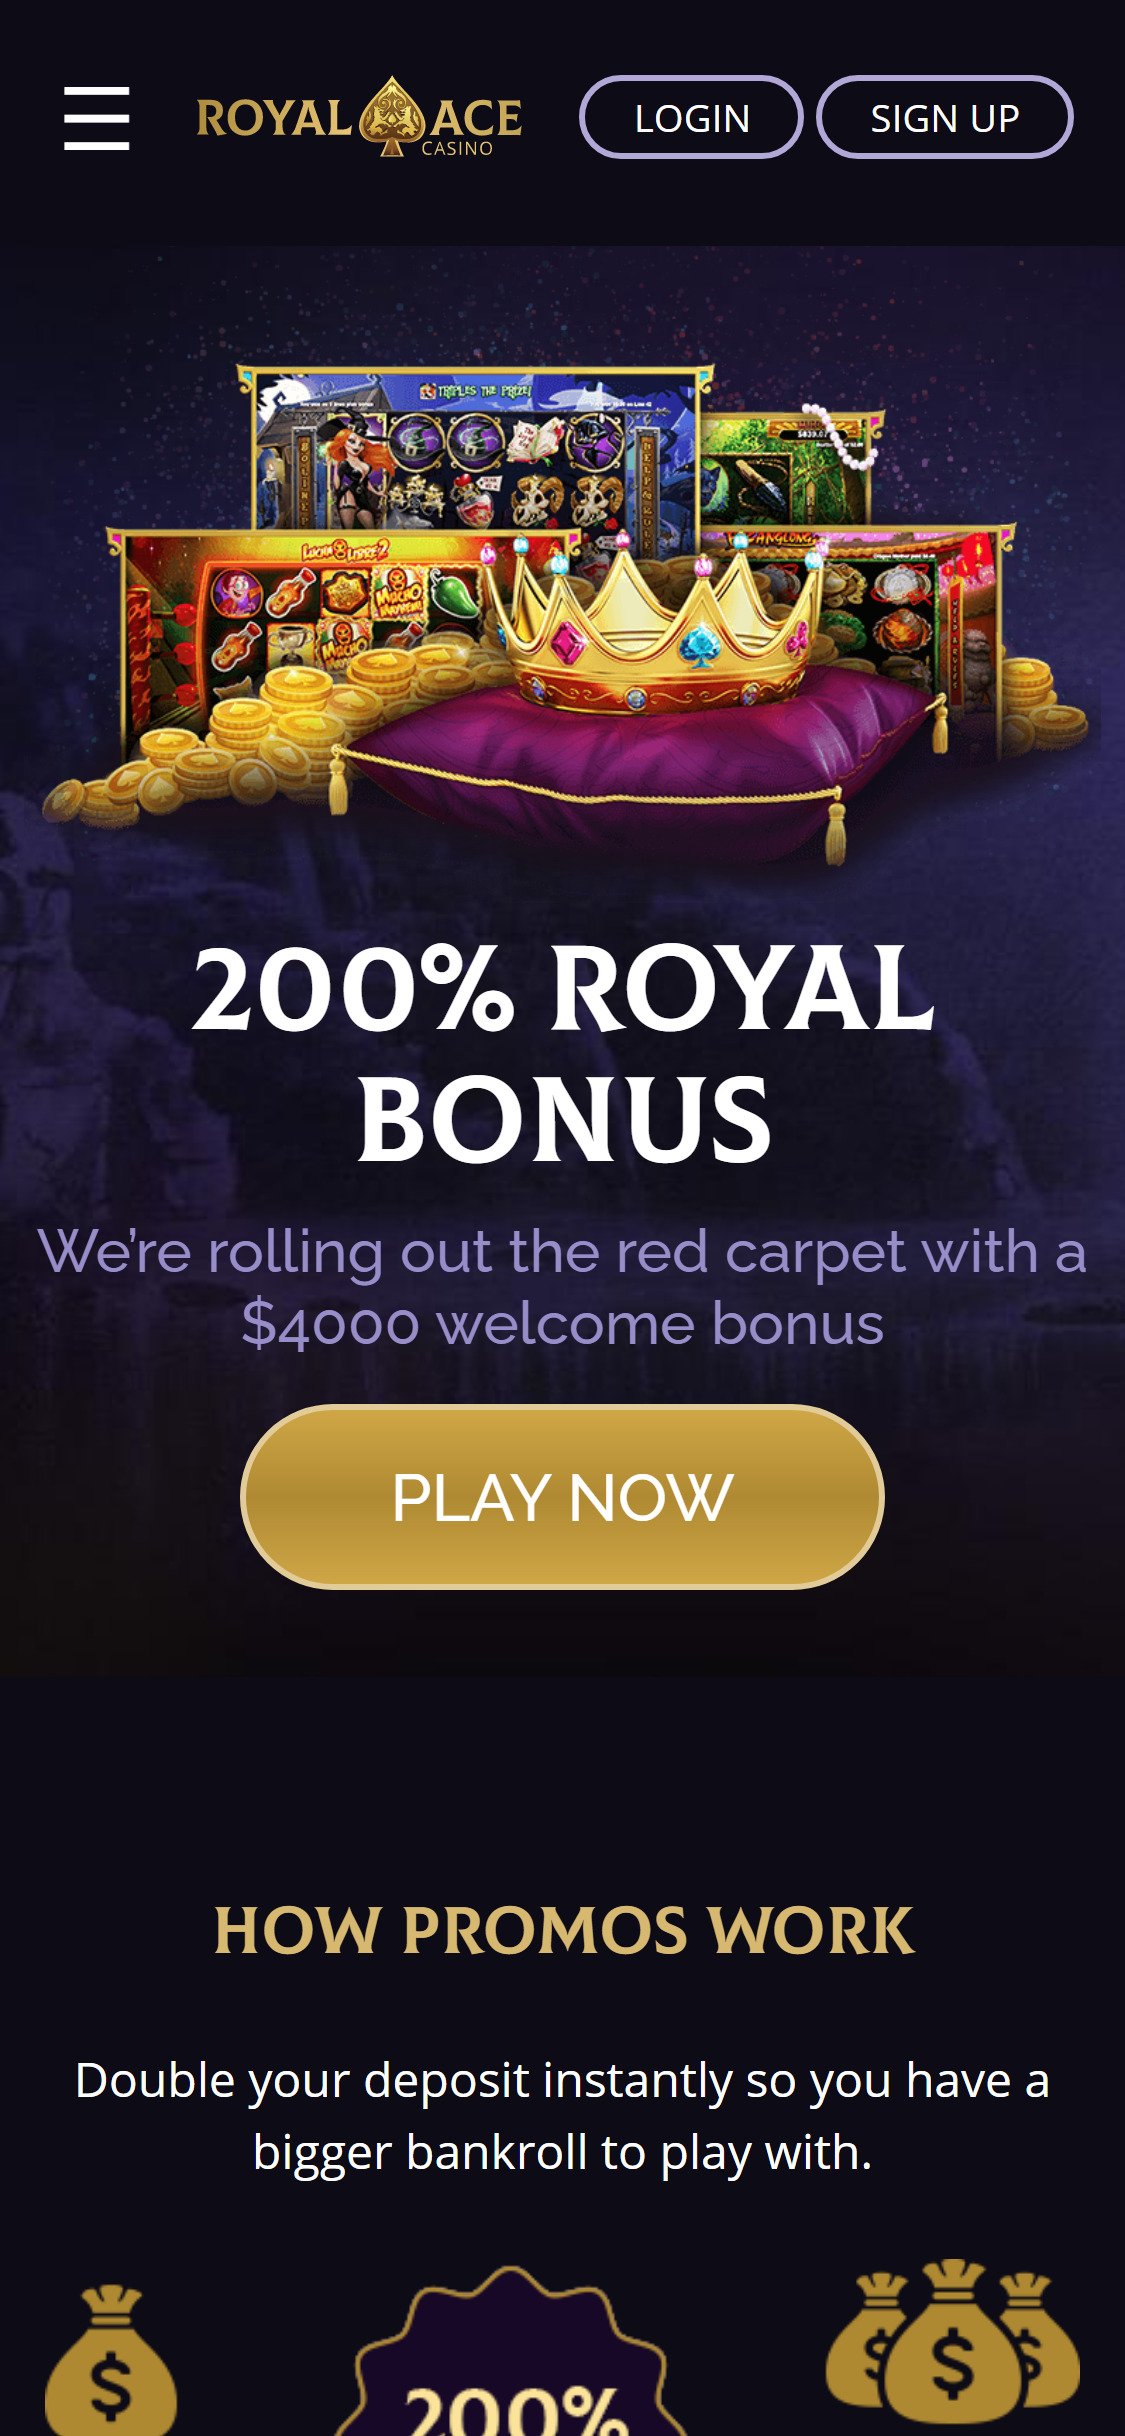 royal ace casino welcome bonus